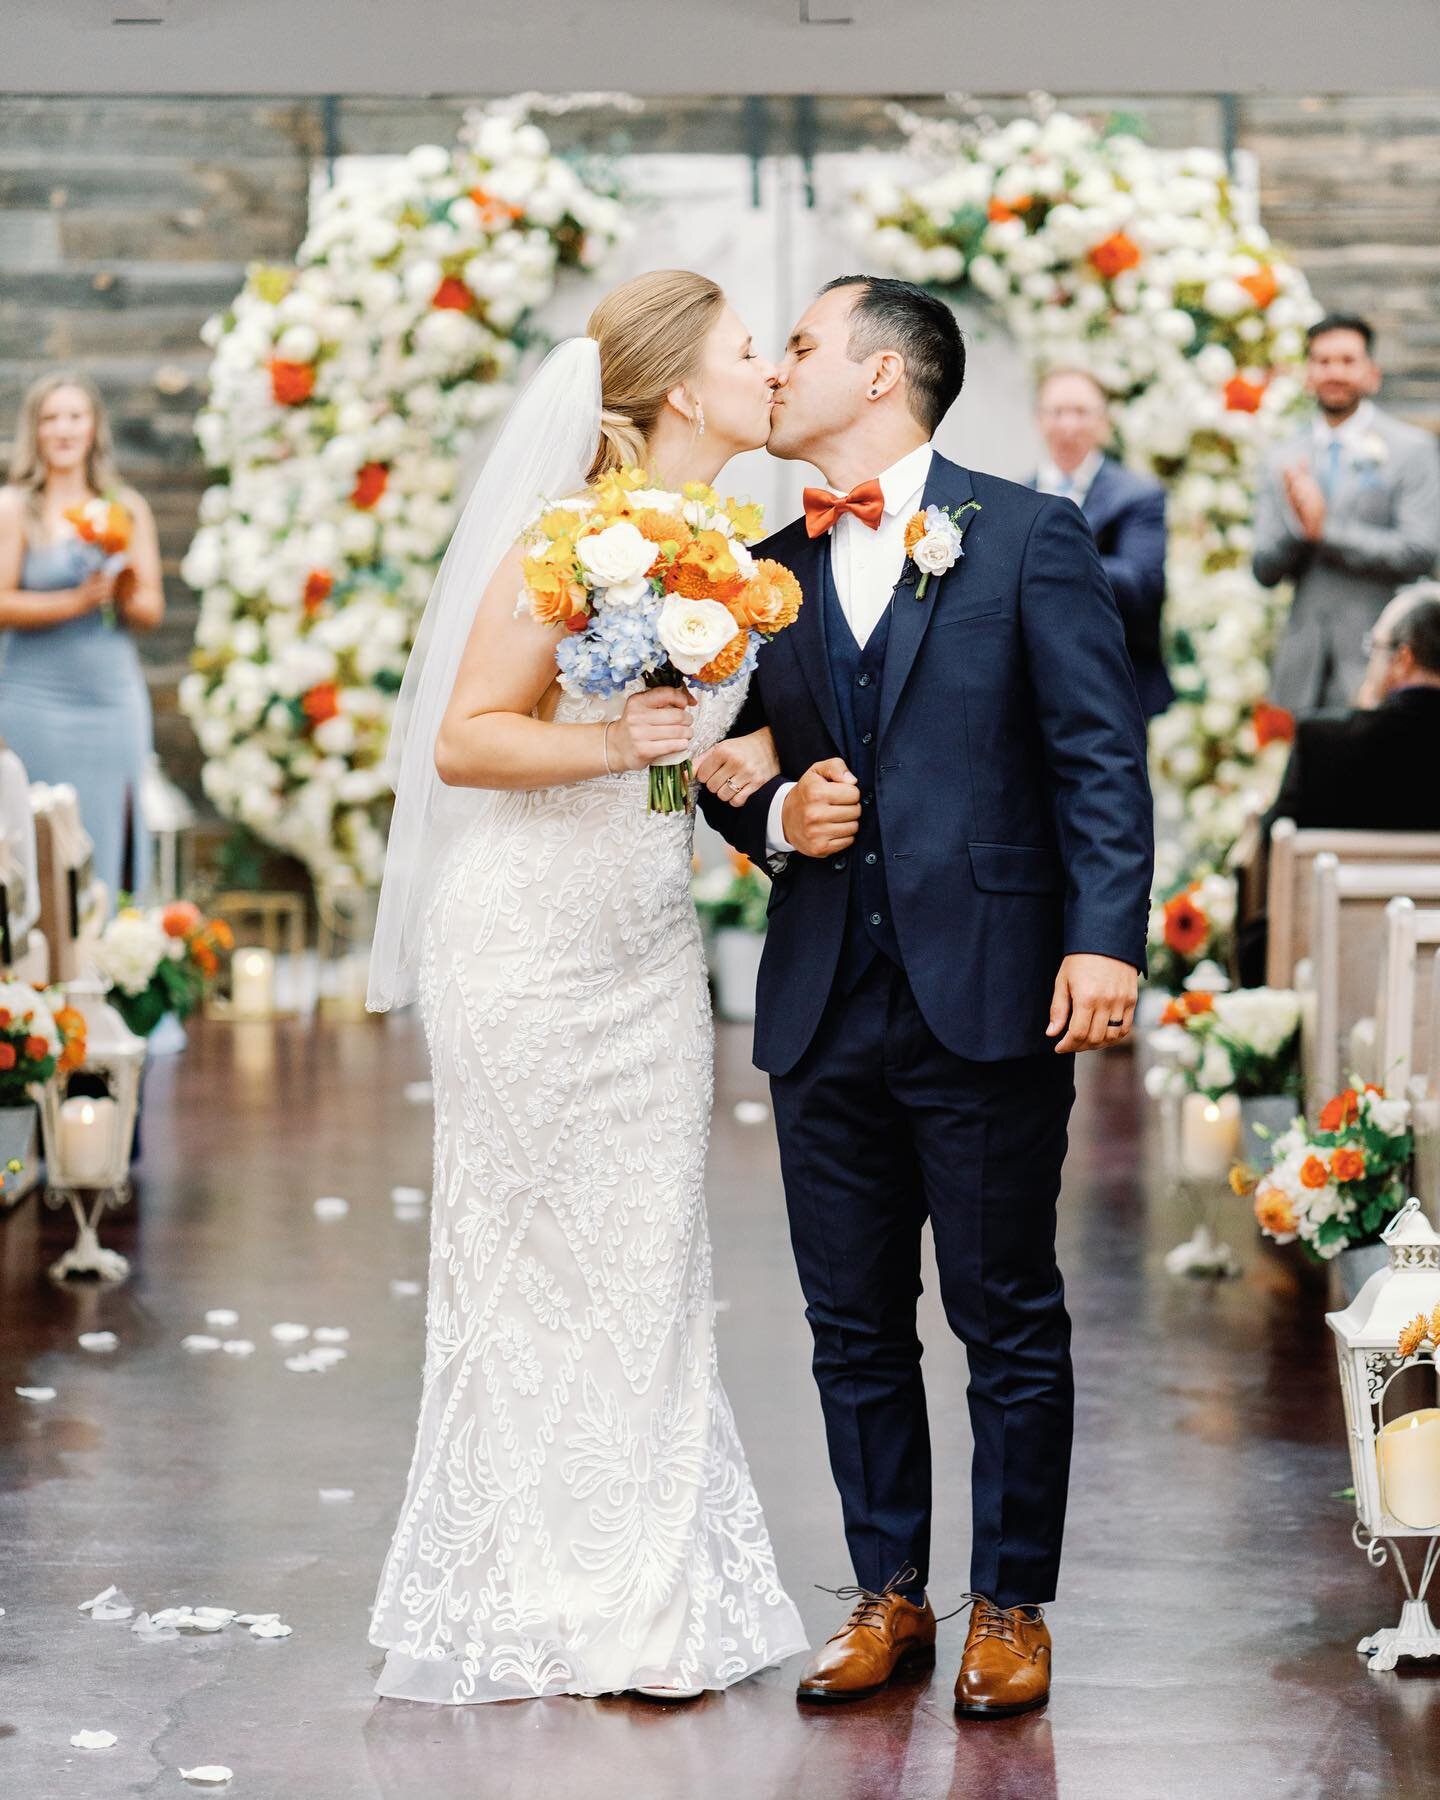 2nd kiss as husband and wife. Capturing the kiss as they walk down the aisle after the I do&rsquo;s.
+
#wedding #bride #bridetobe #weddingdress #weddingvail #gettingmarried #weddingdress #californiawedding #realwedding #weddinginspiration #ido #isaid